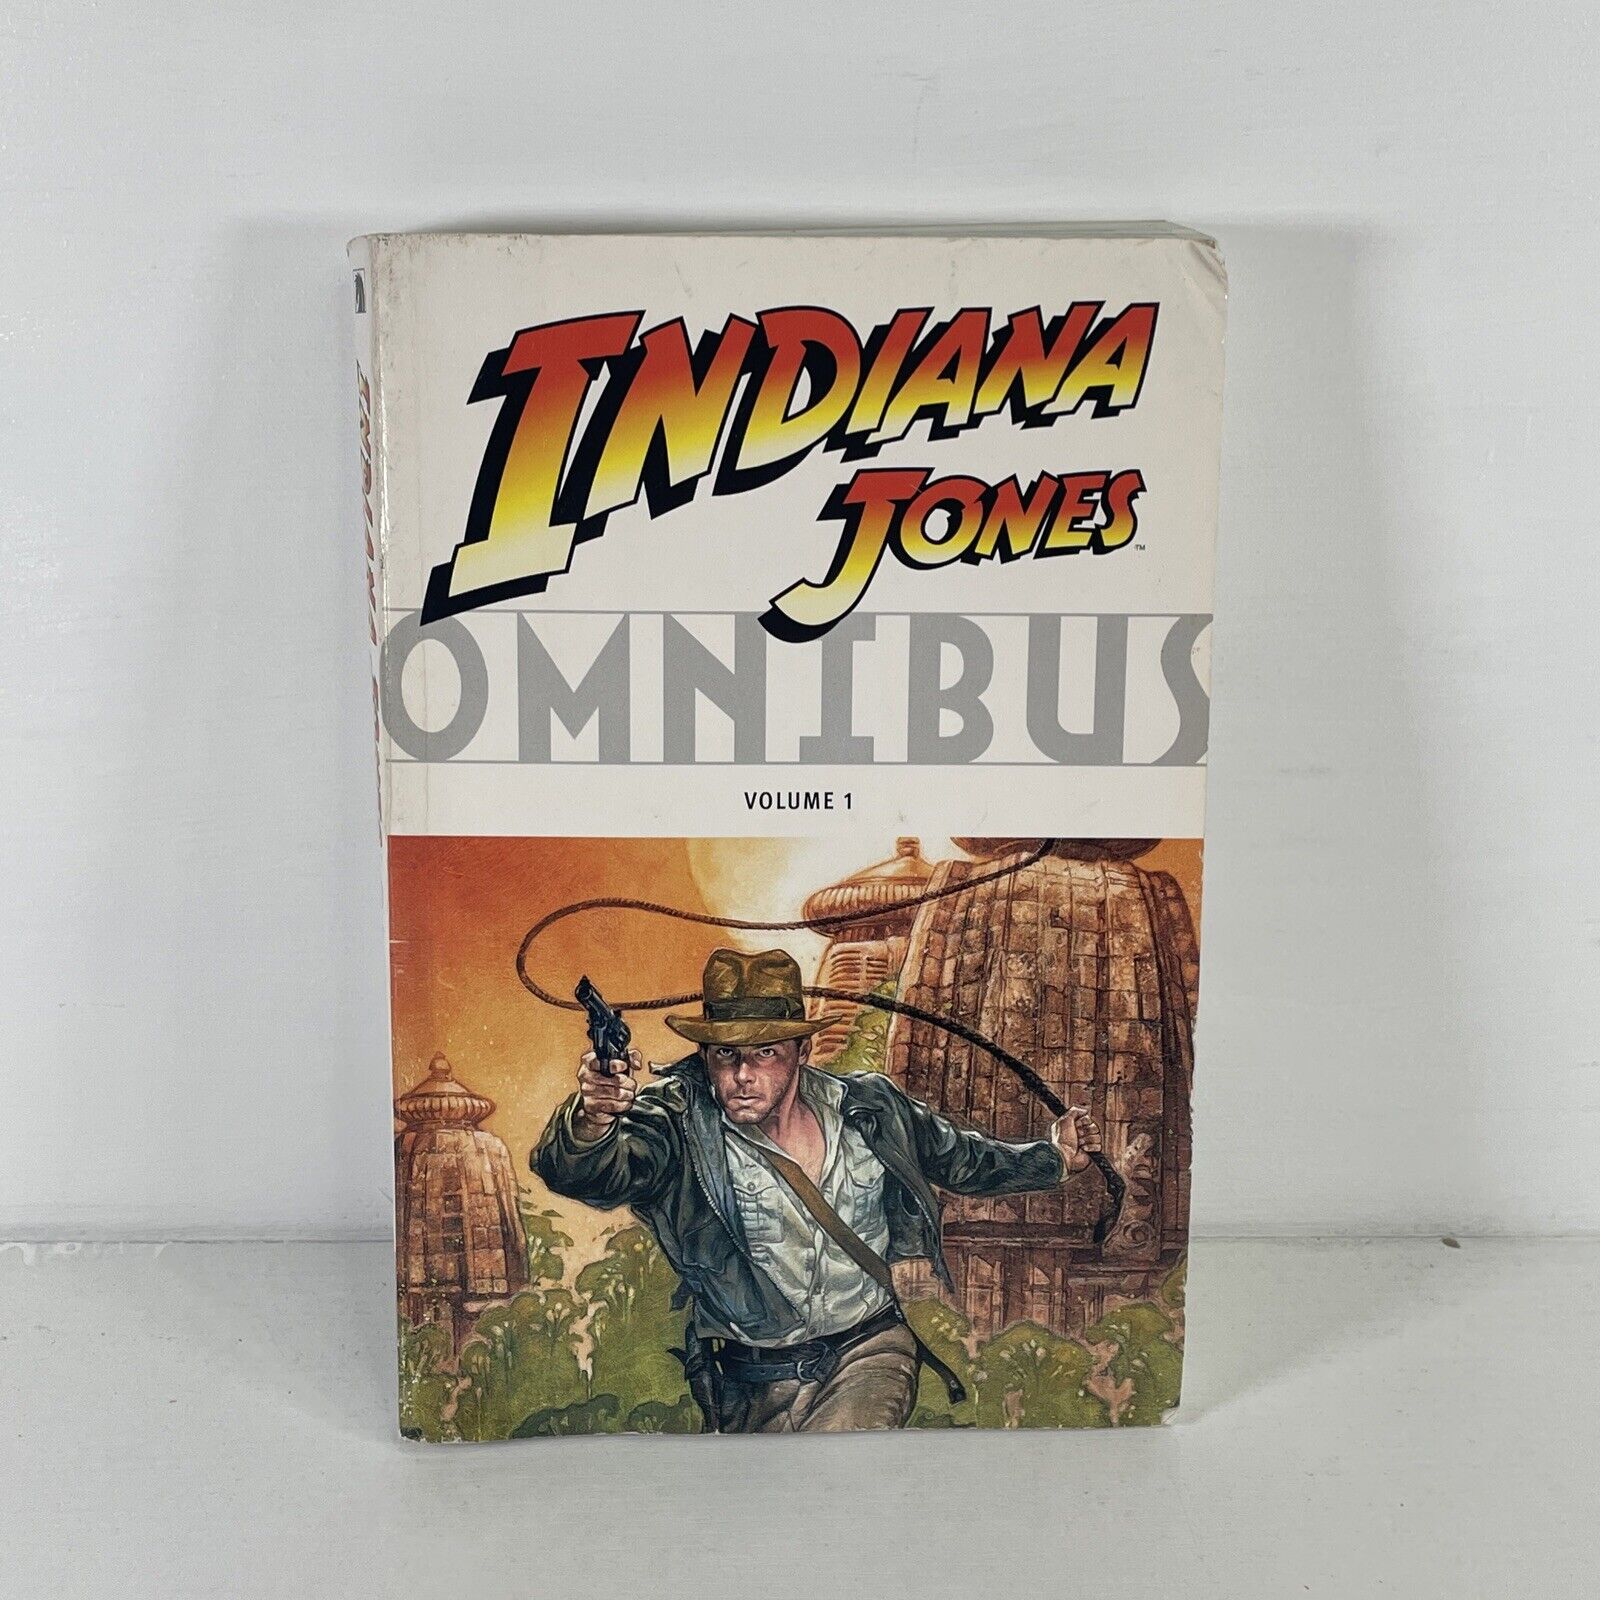 Indiana Jones Omnibus #1 (Dark Horse Comics, February 2008) Volume 1 One